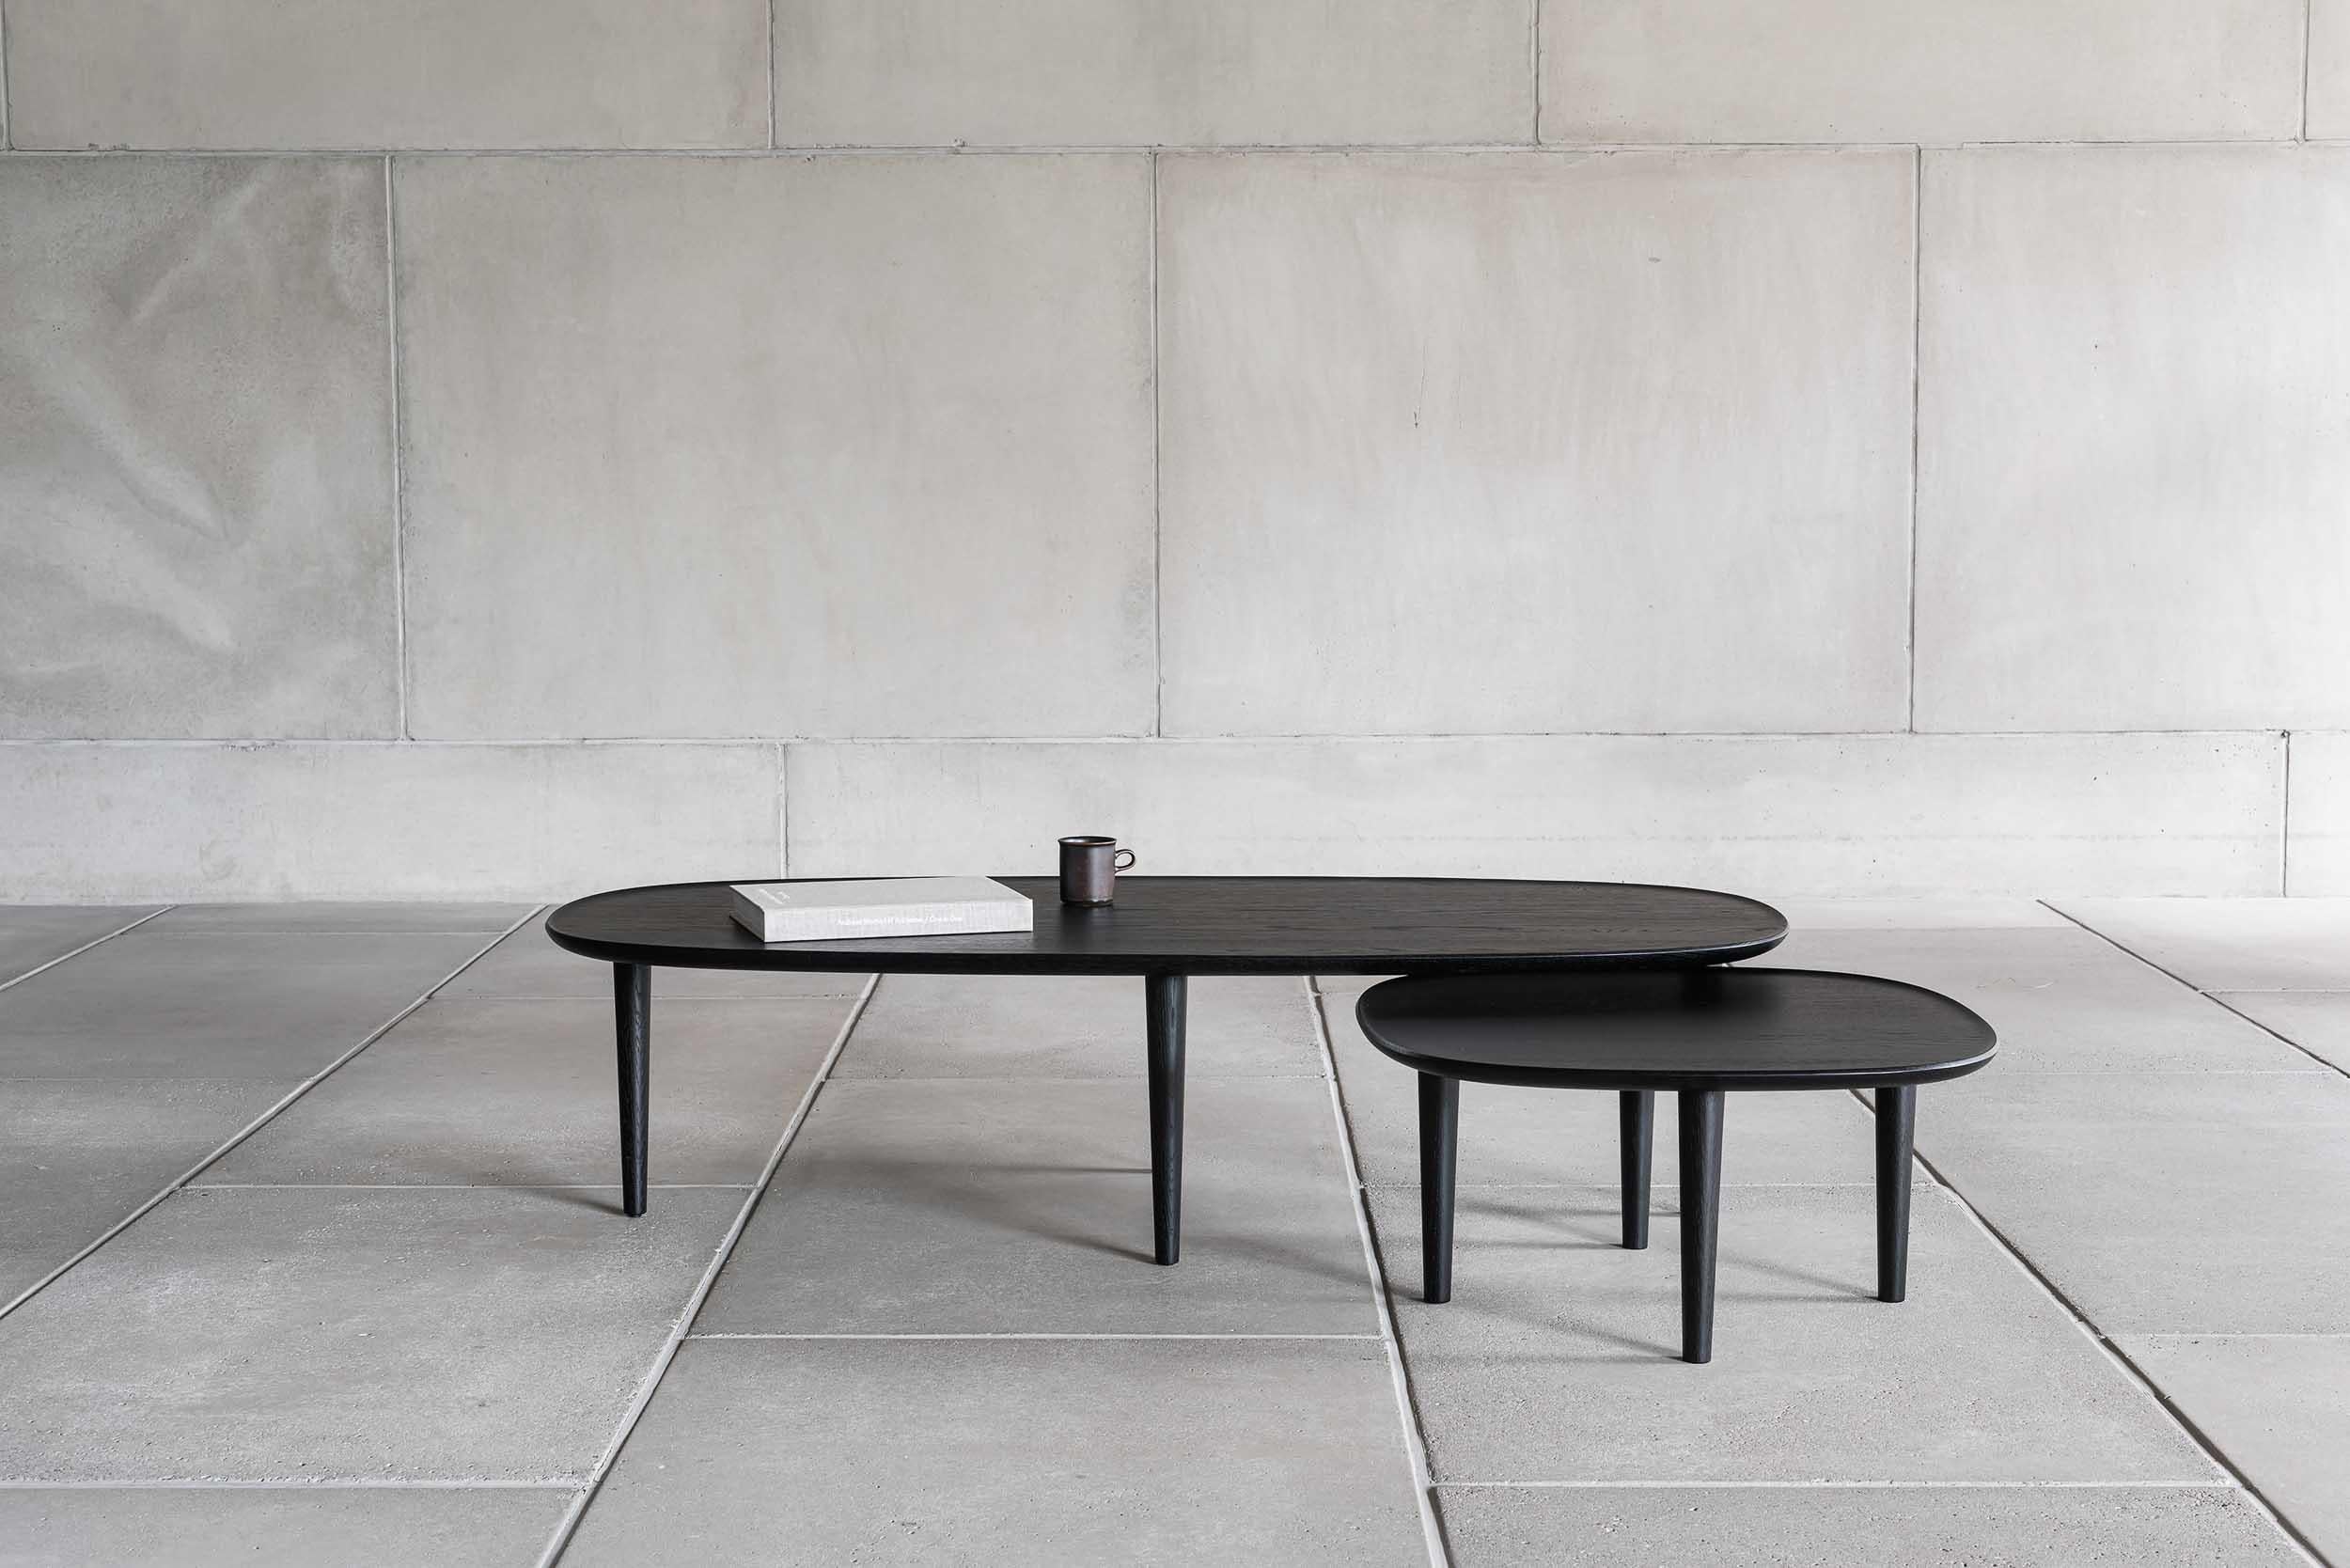 Fiori table 140 designed by Antrei Hartikainen x Poiat
Fiori Collection 2017

Available finishes: 
- Oak
- Dark oak 
- Black oak

Model shown in picture : 
- H. 35 x 140 x 65 cm
- Dark oak

Designed by Poiat Studio in collaboration with